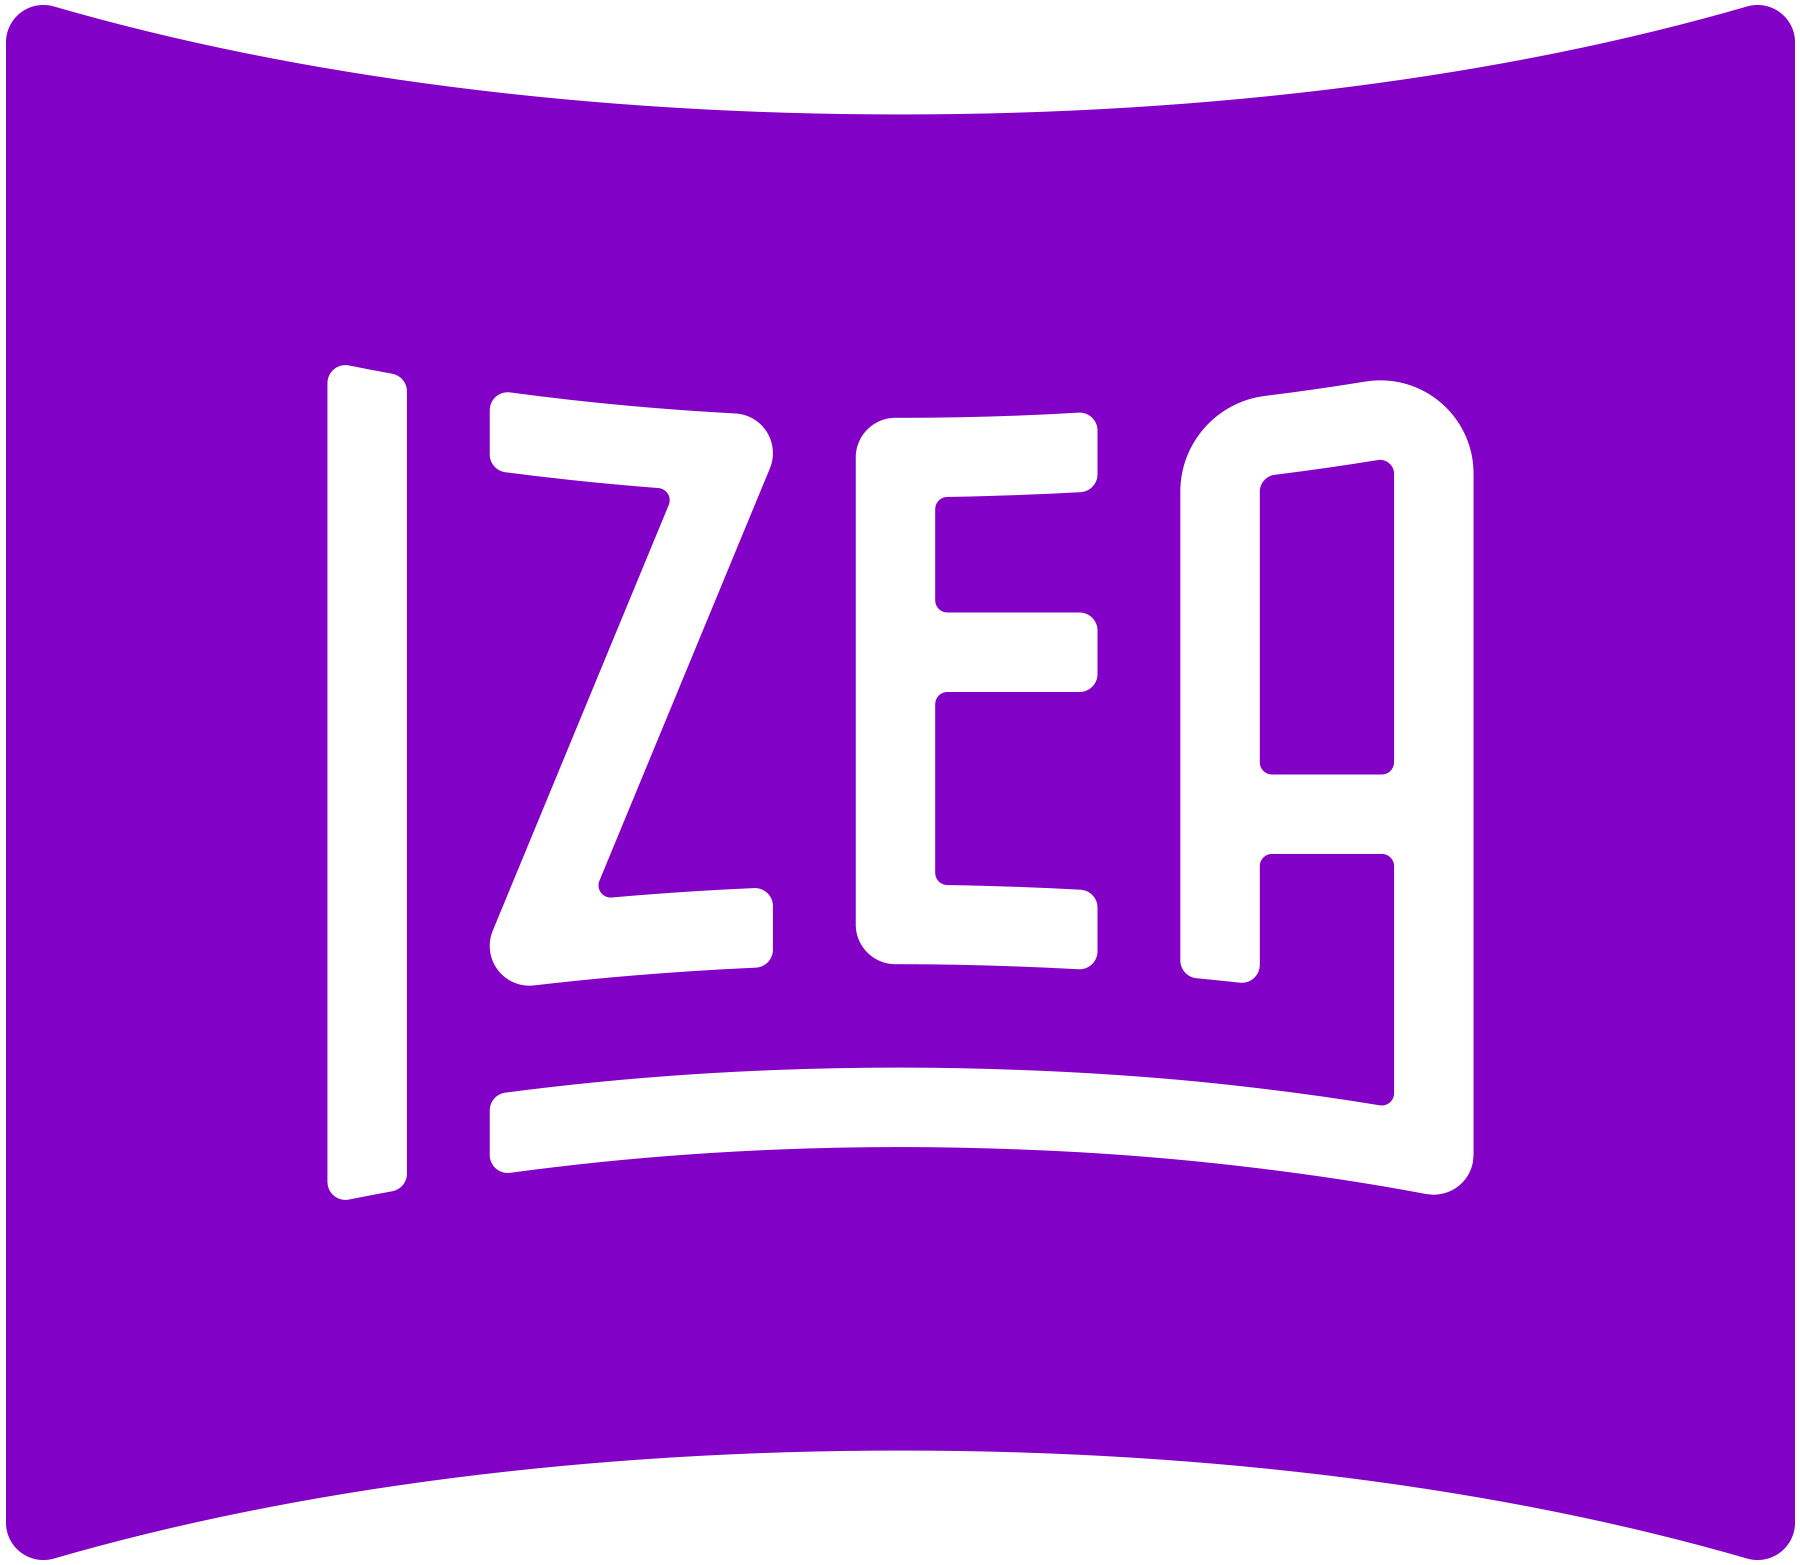 IZEA Announces Flex Copilot